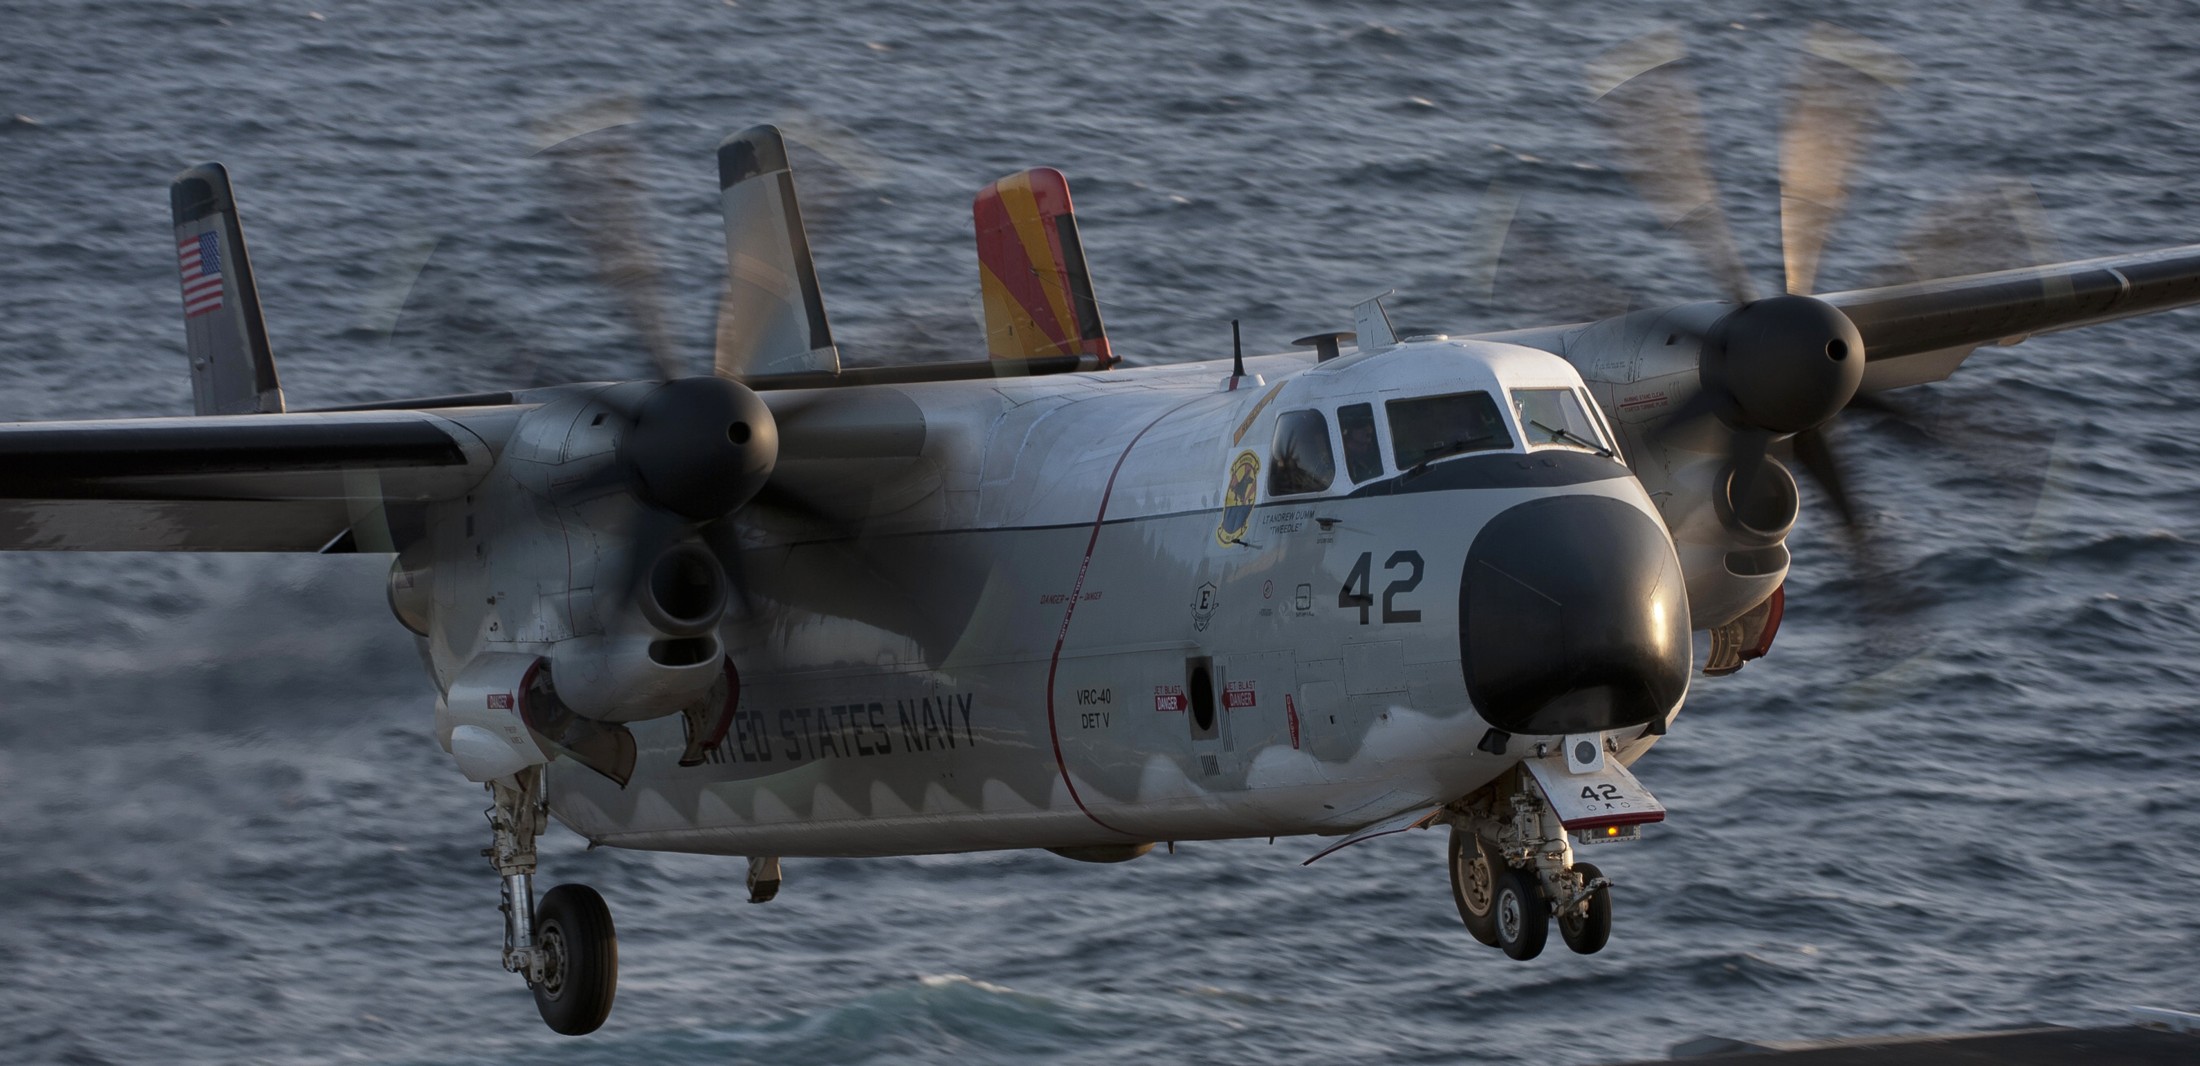 vrc-40 rawhides fleet logistics support squadron flelogsupron us navy grumman c-2a greyhound uss carl vinson cvn-70 178